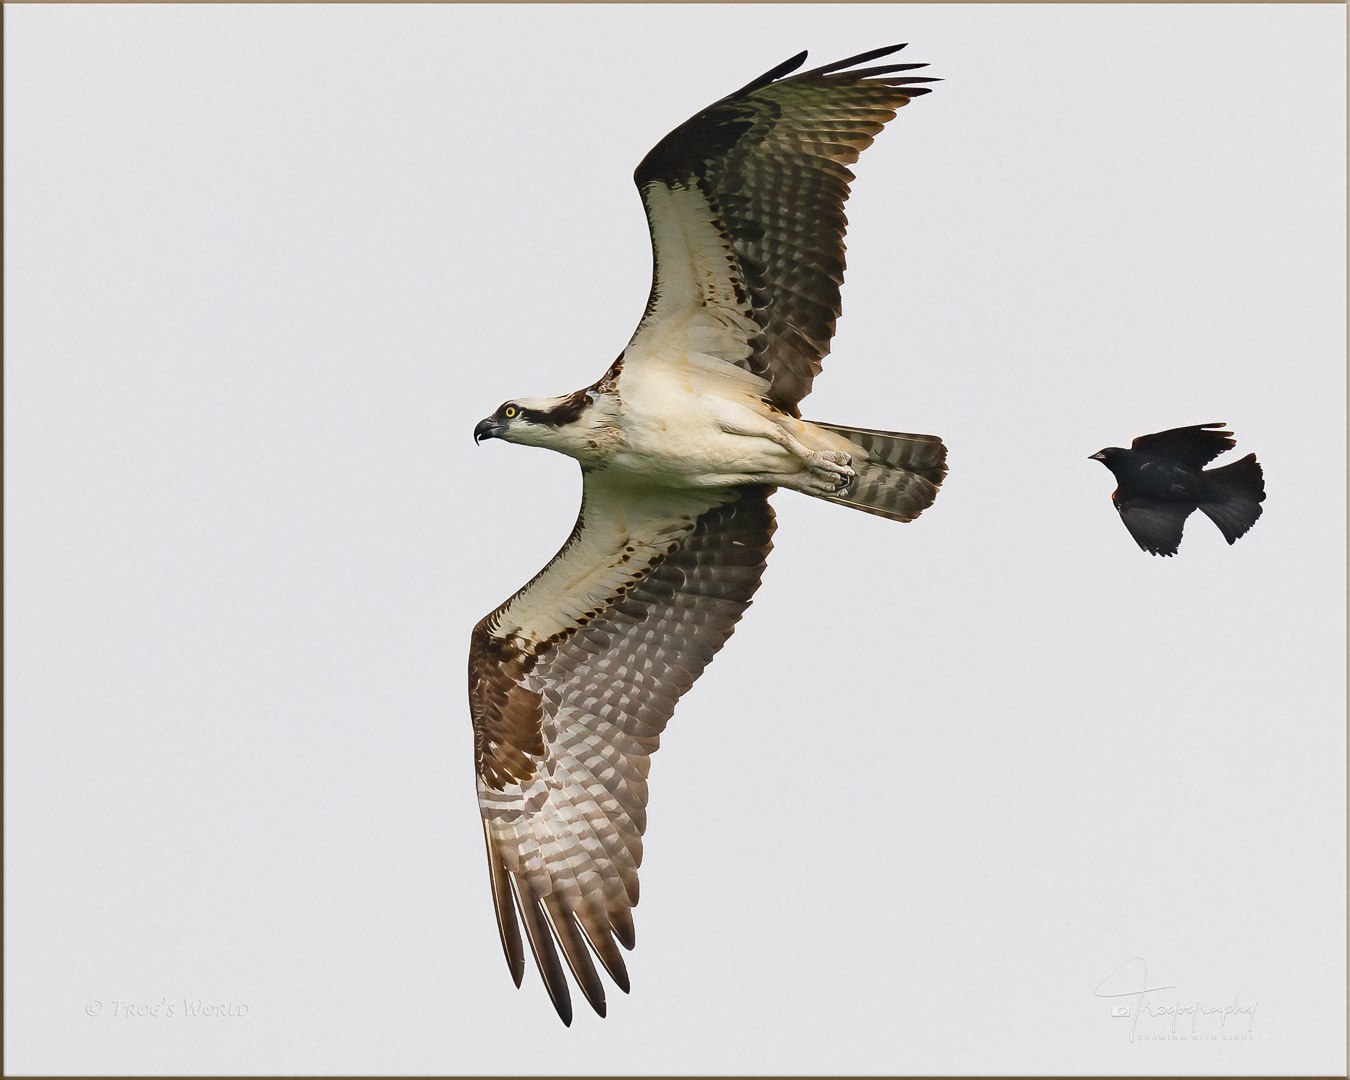 Red-winged Blackbird chasing an Osprey